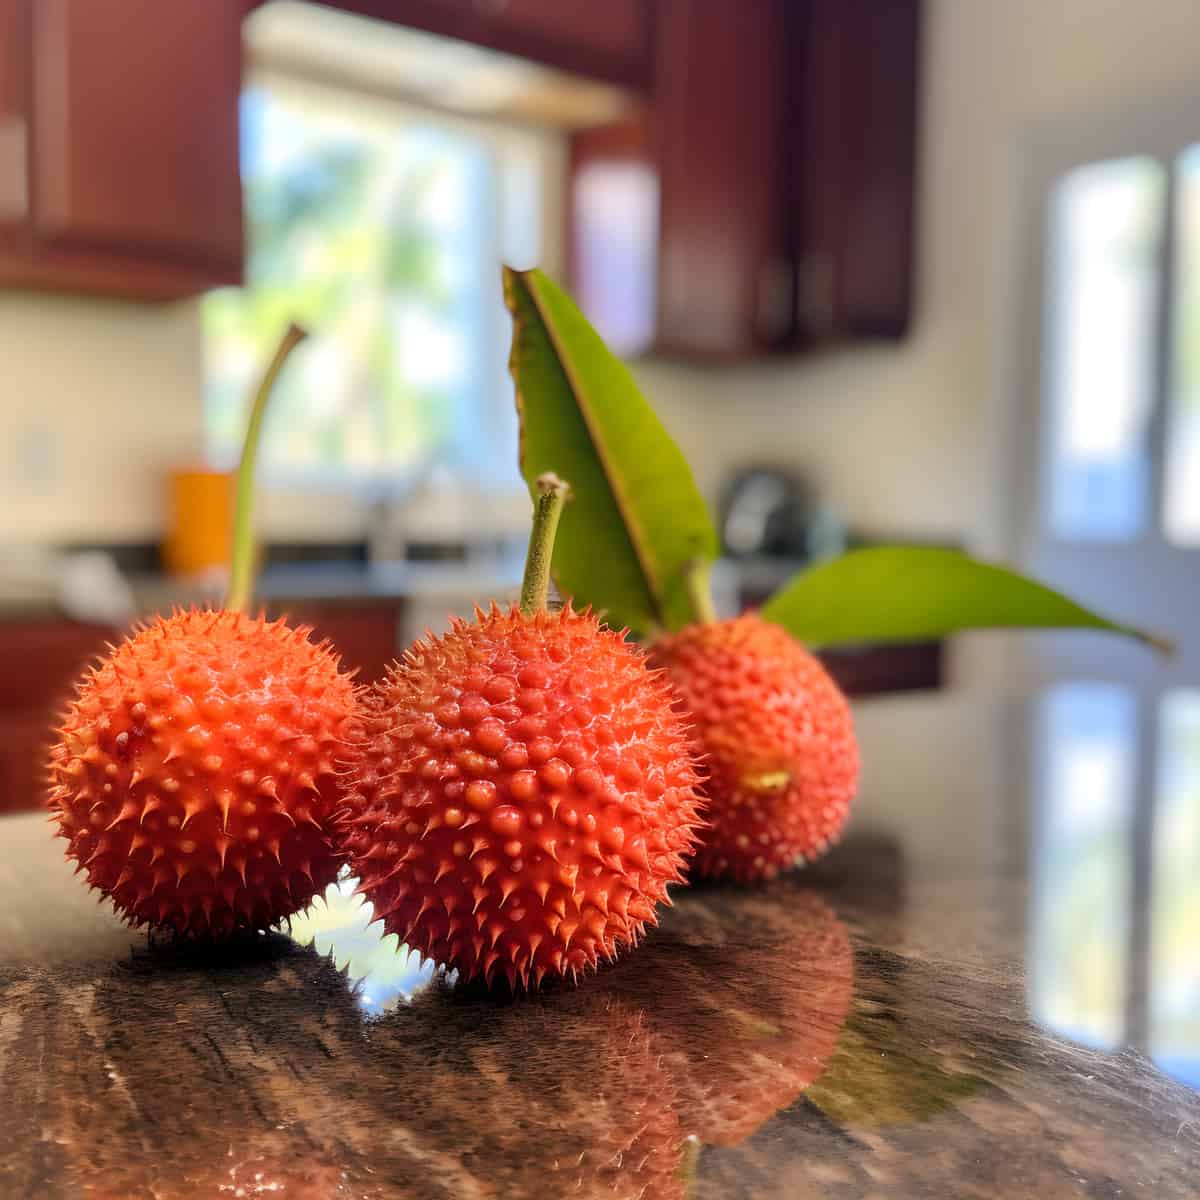 Duguetia Spixiana Fruit on a kitchen counter